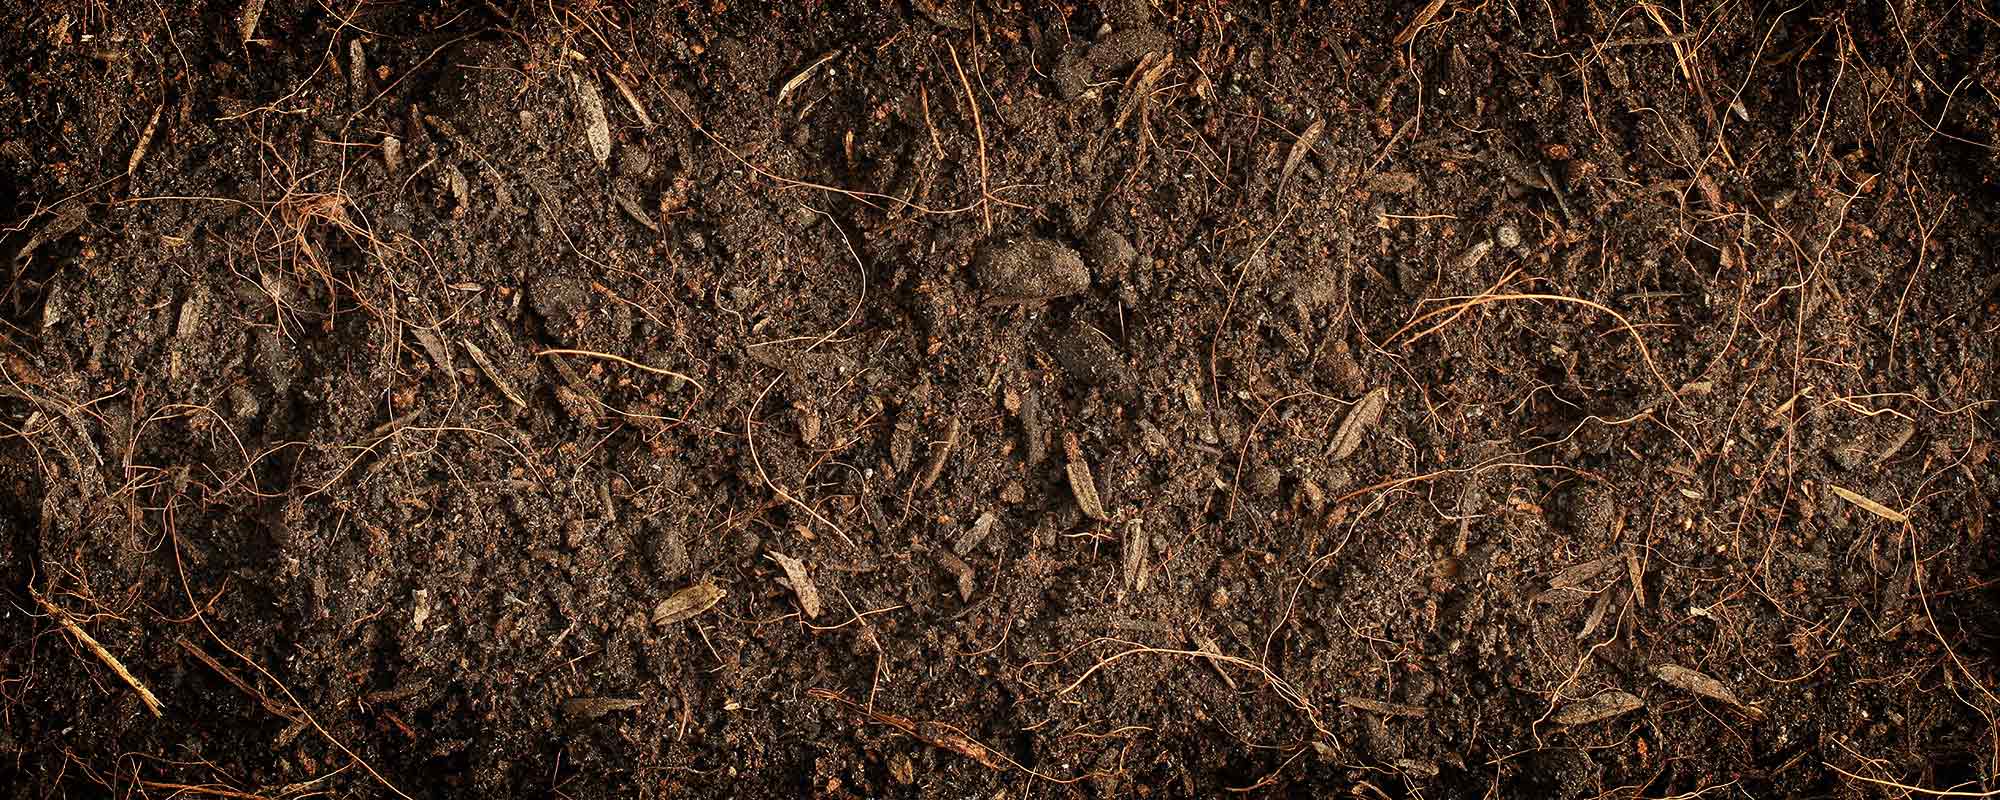 Корневой участок. Почва с травой. Земля с корешками. Текстура навоза. Корни в почве.